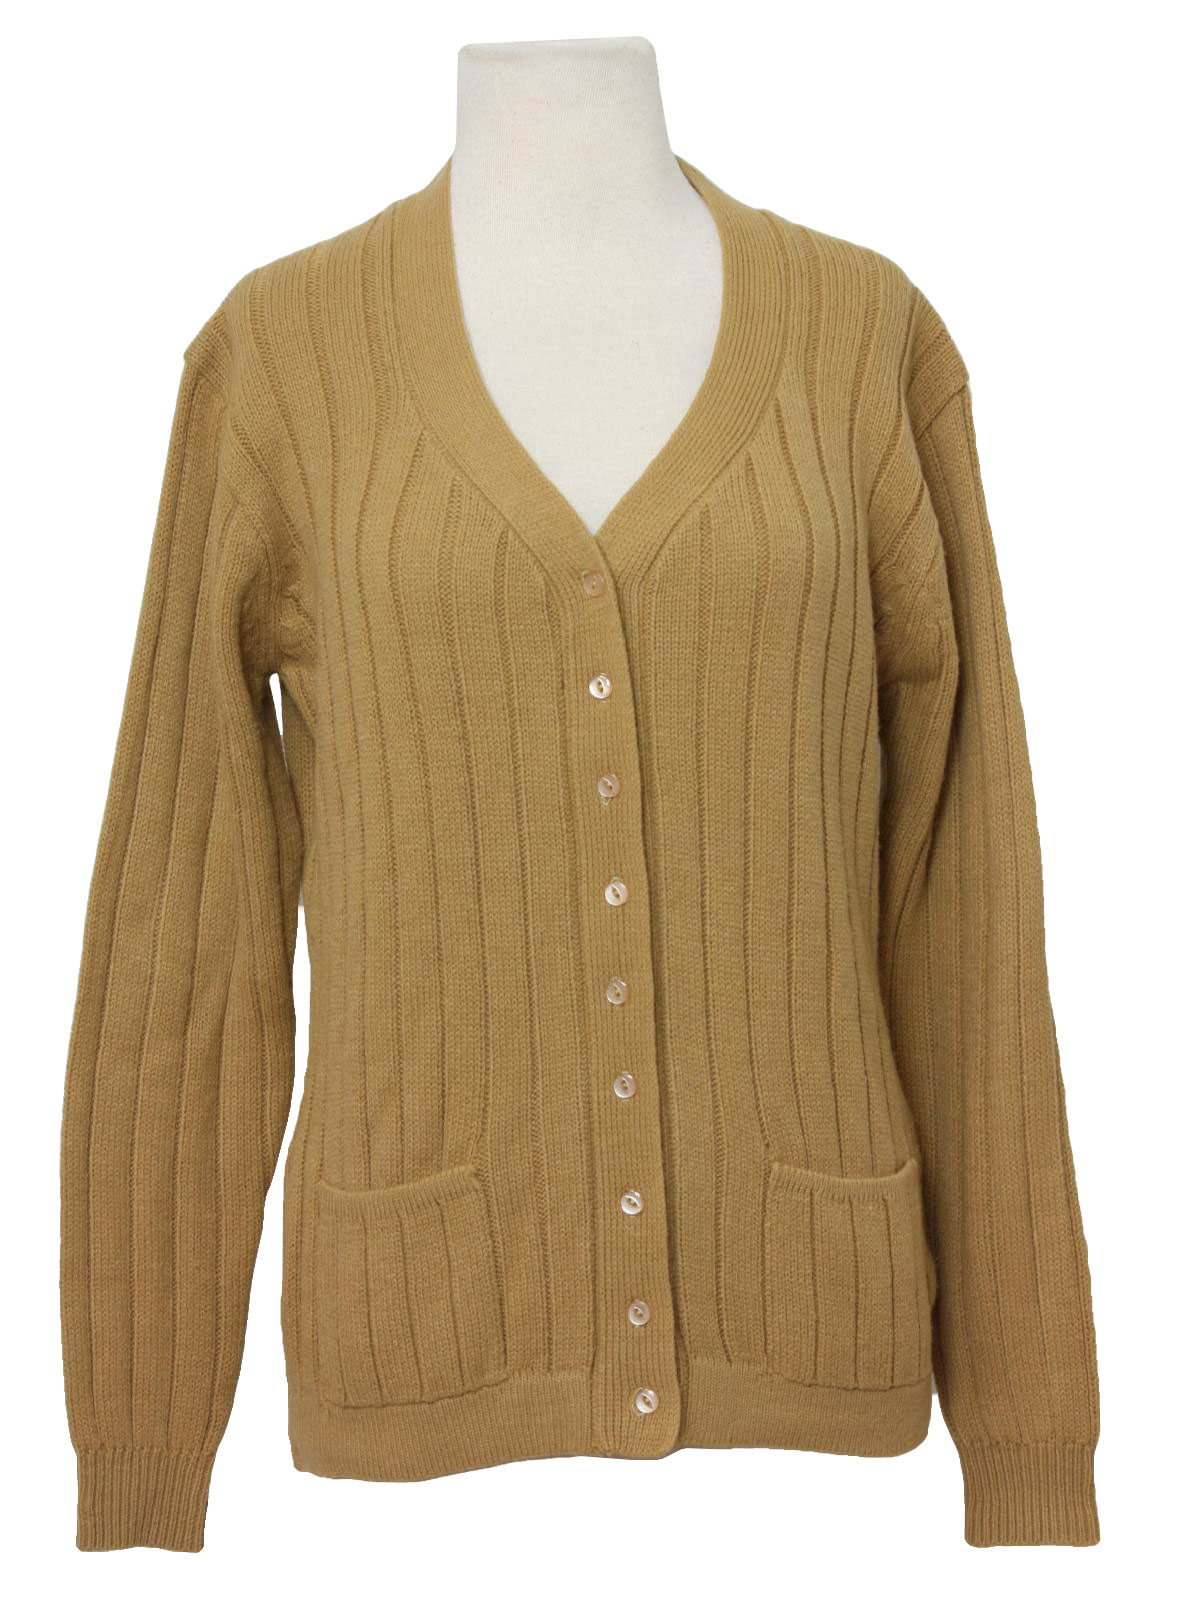 Acrylic Fibre 1970s Vintage Caridgan Sweater: 70s -Acrylic Fibre ...